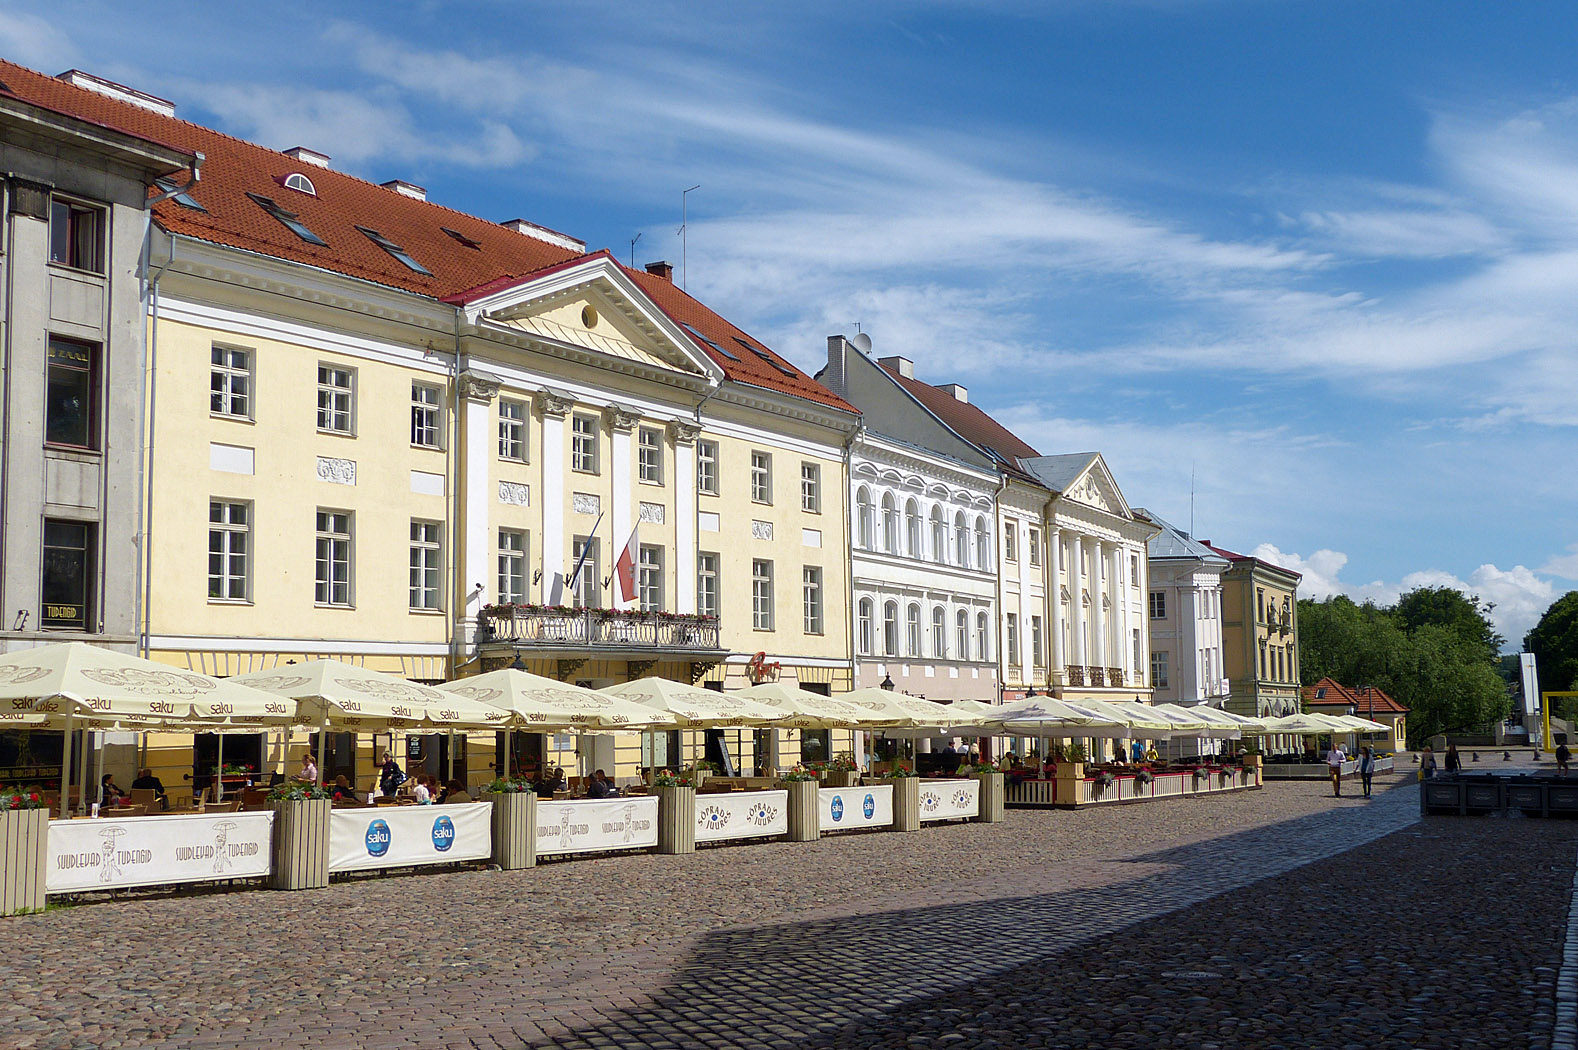 Old Town Square, Tartu, Estonia